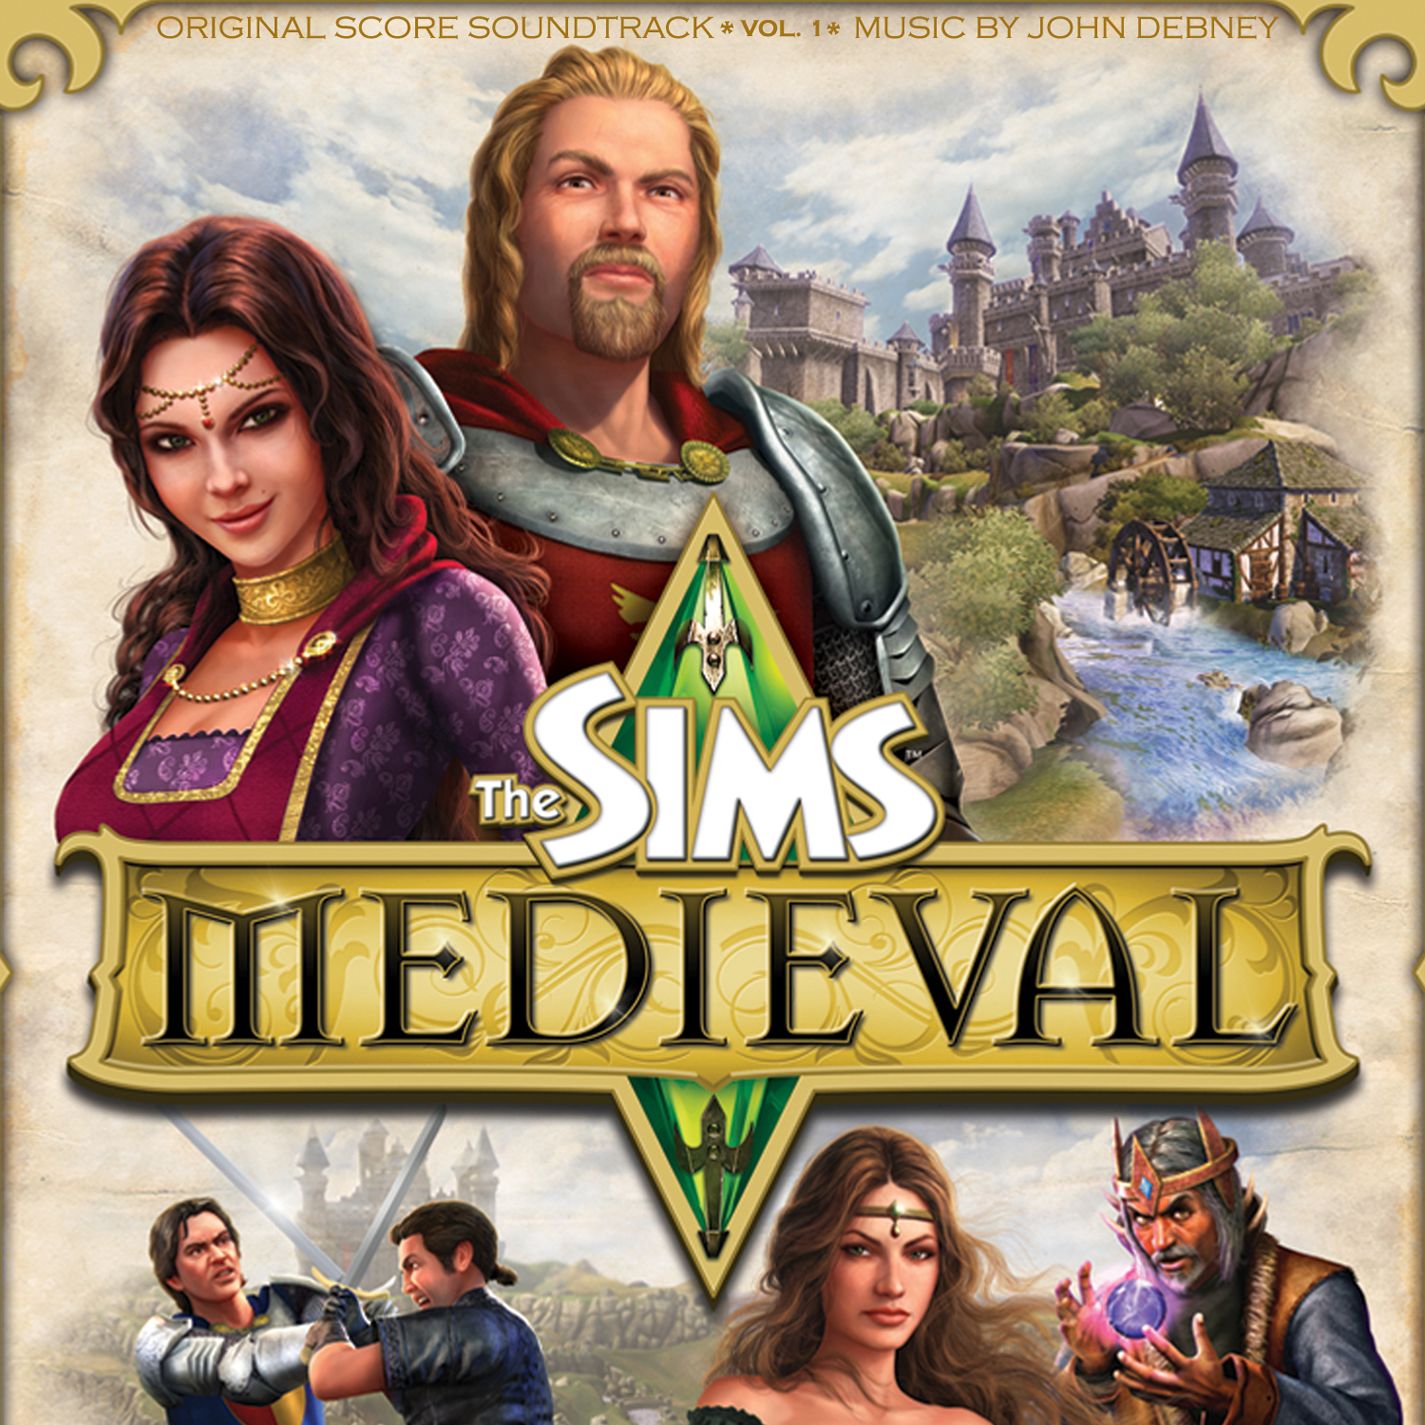 The Sims Medieval Original Score Soundtrack Vol. 1